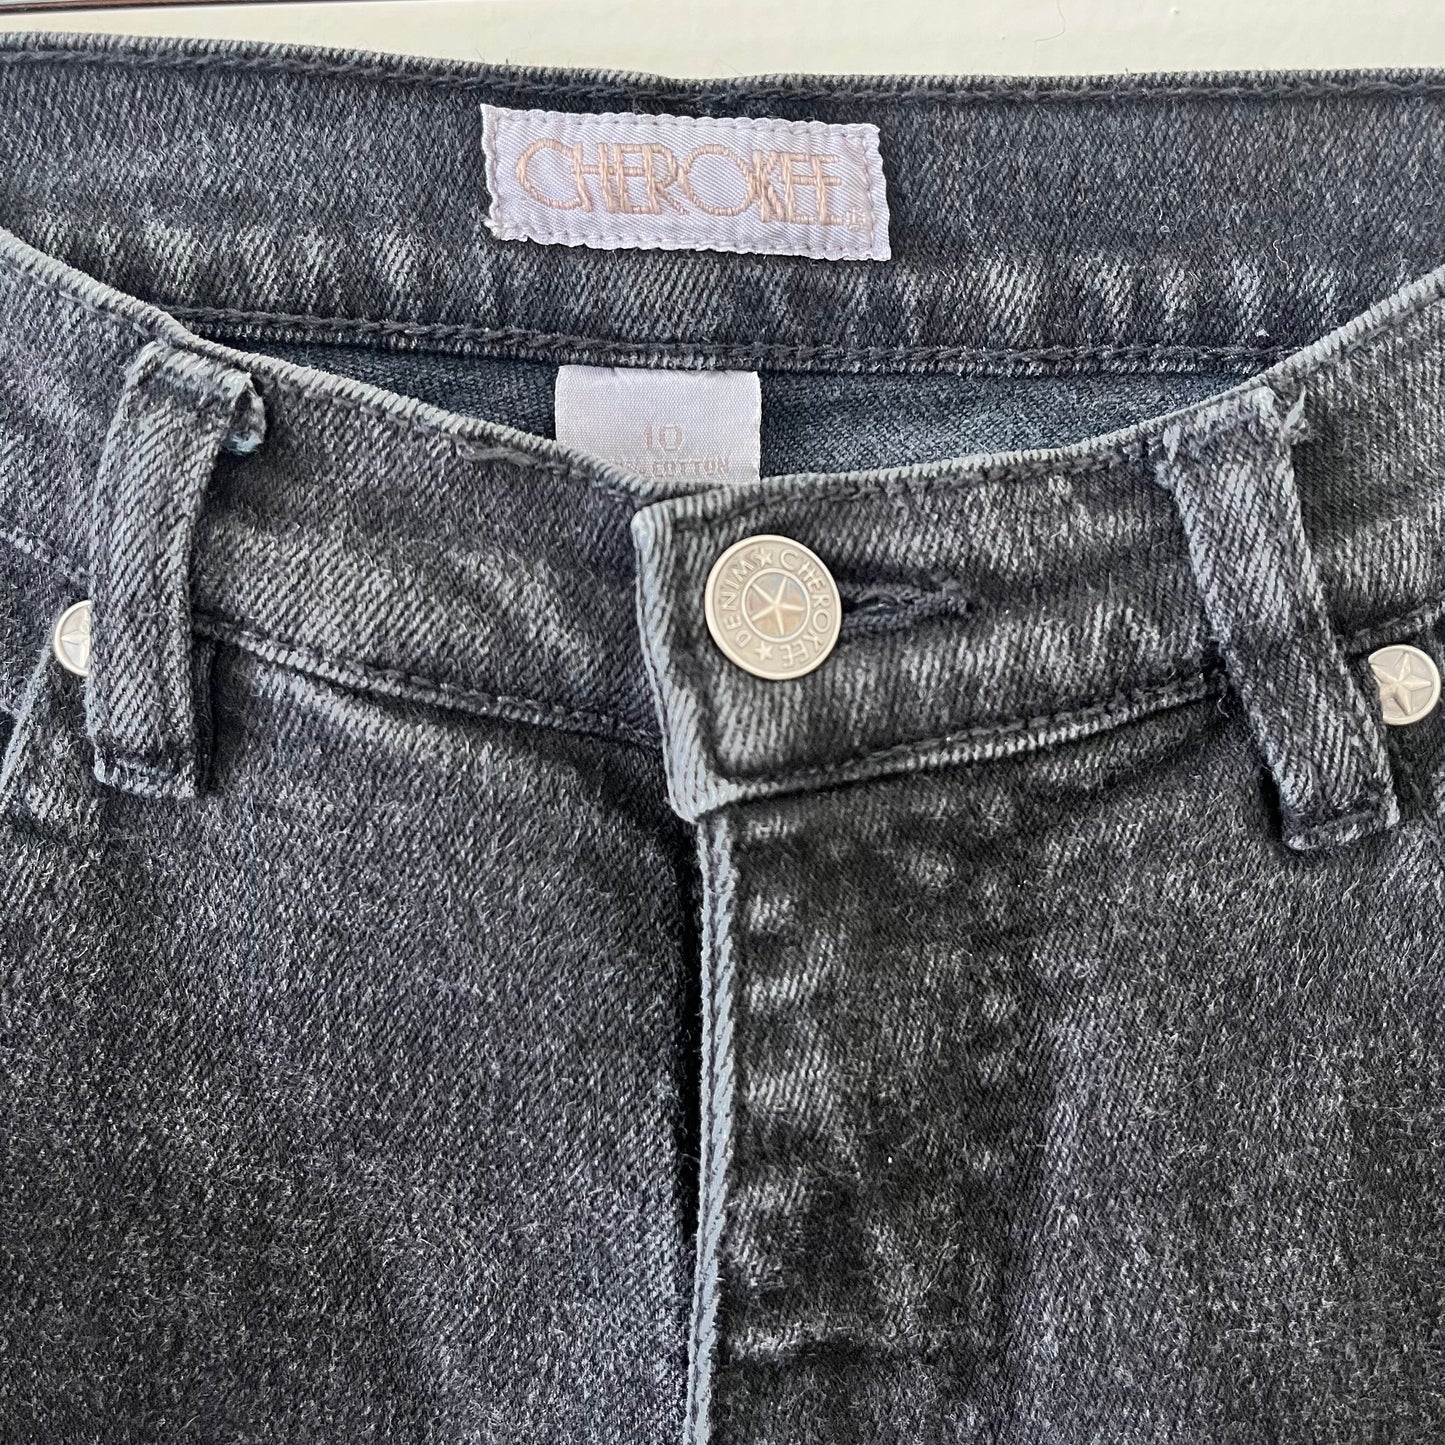 Black Cherokee Jeans (14.5” across waist)